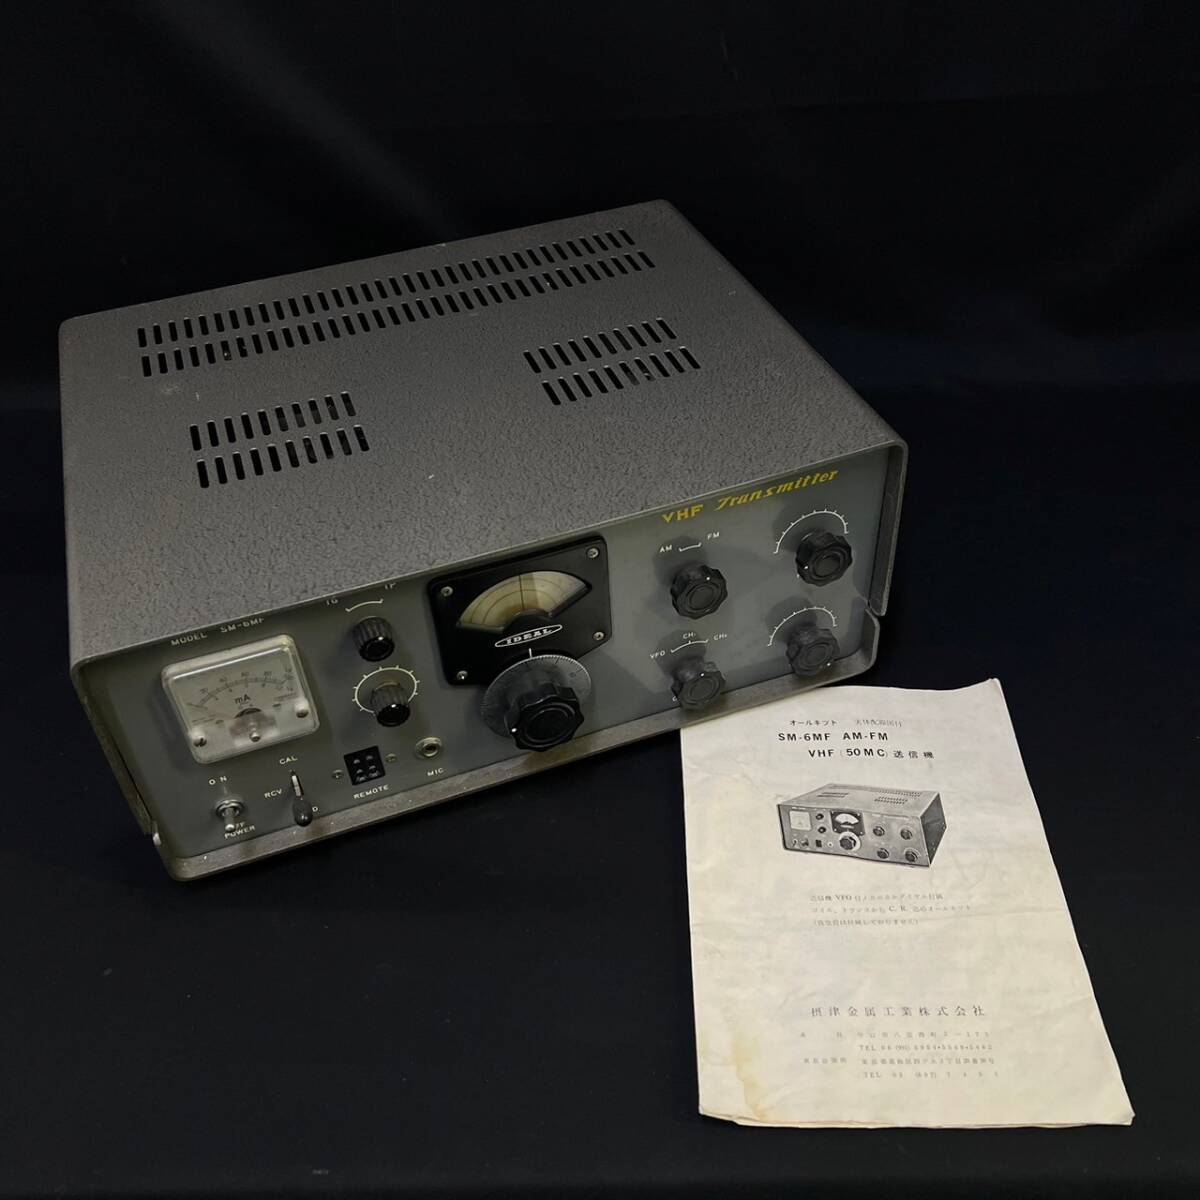 BDg235I 120 真空管 無線機 SM-6MF VHF TRANSMITTER トランスミッター AM-FM 無線 アマチュア無線 送信機 アンティーク レトロ_画像1